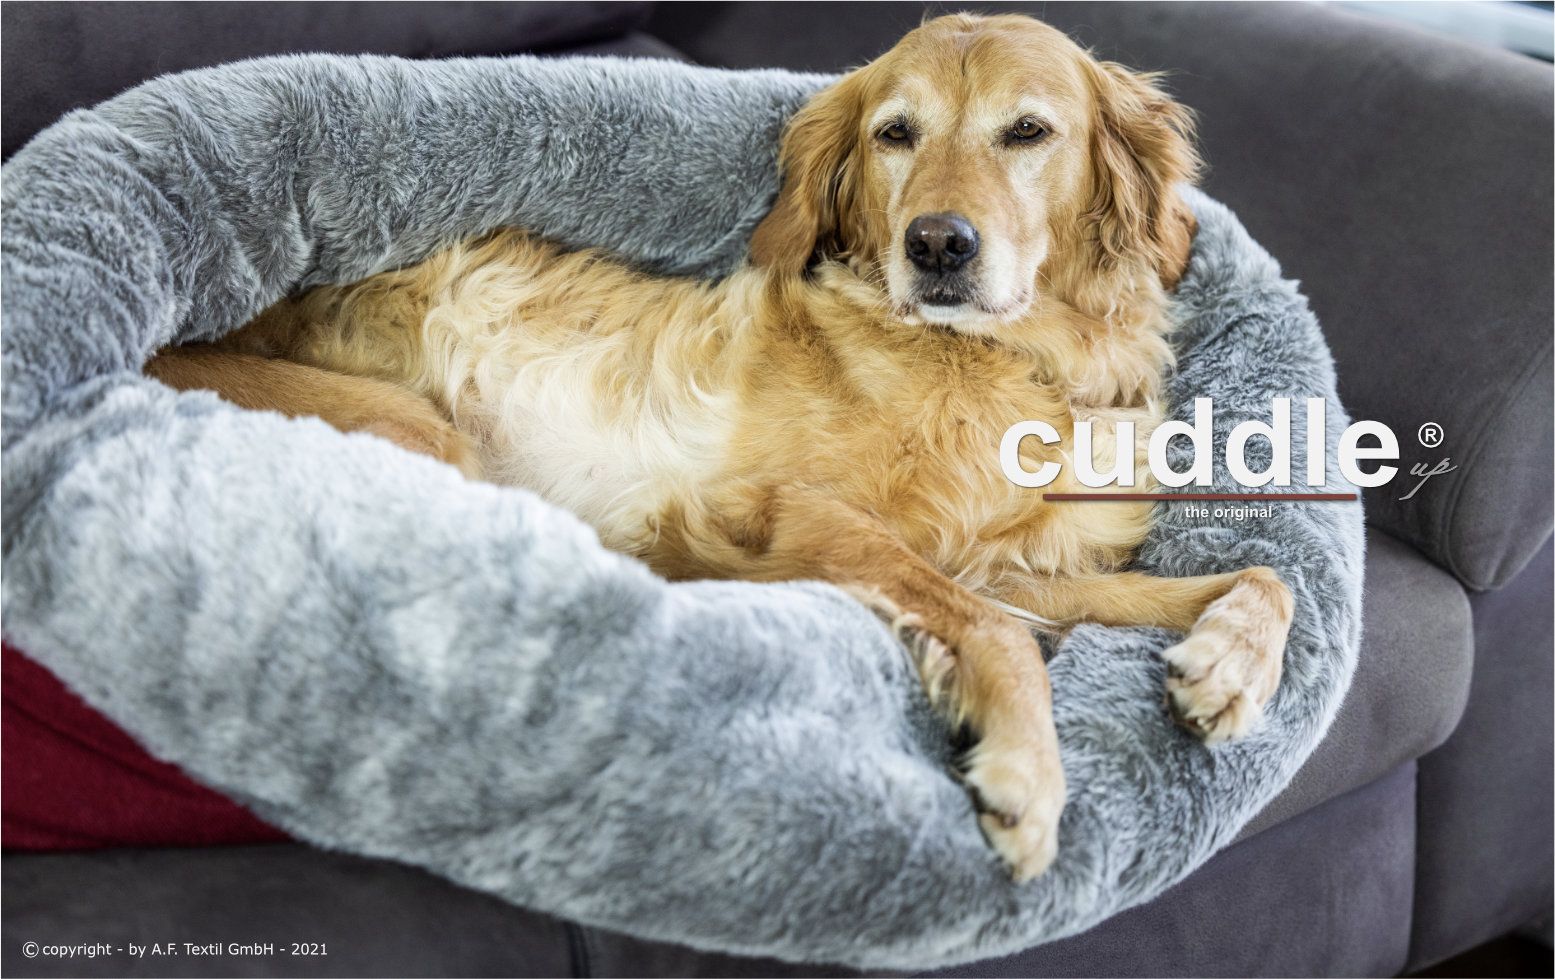 cuddle up 4